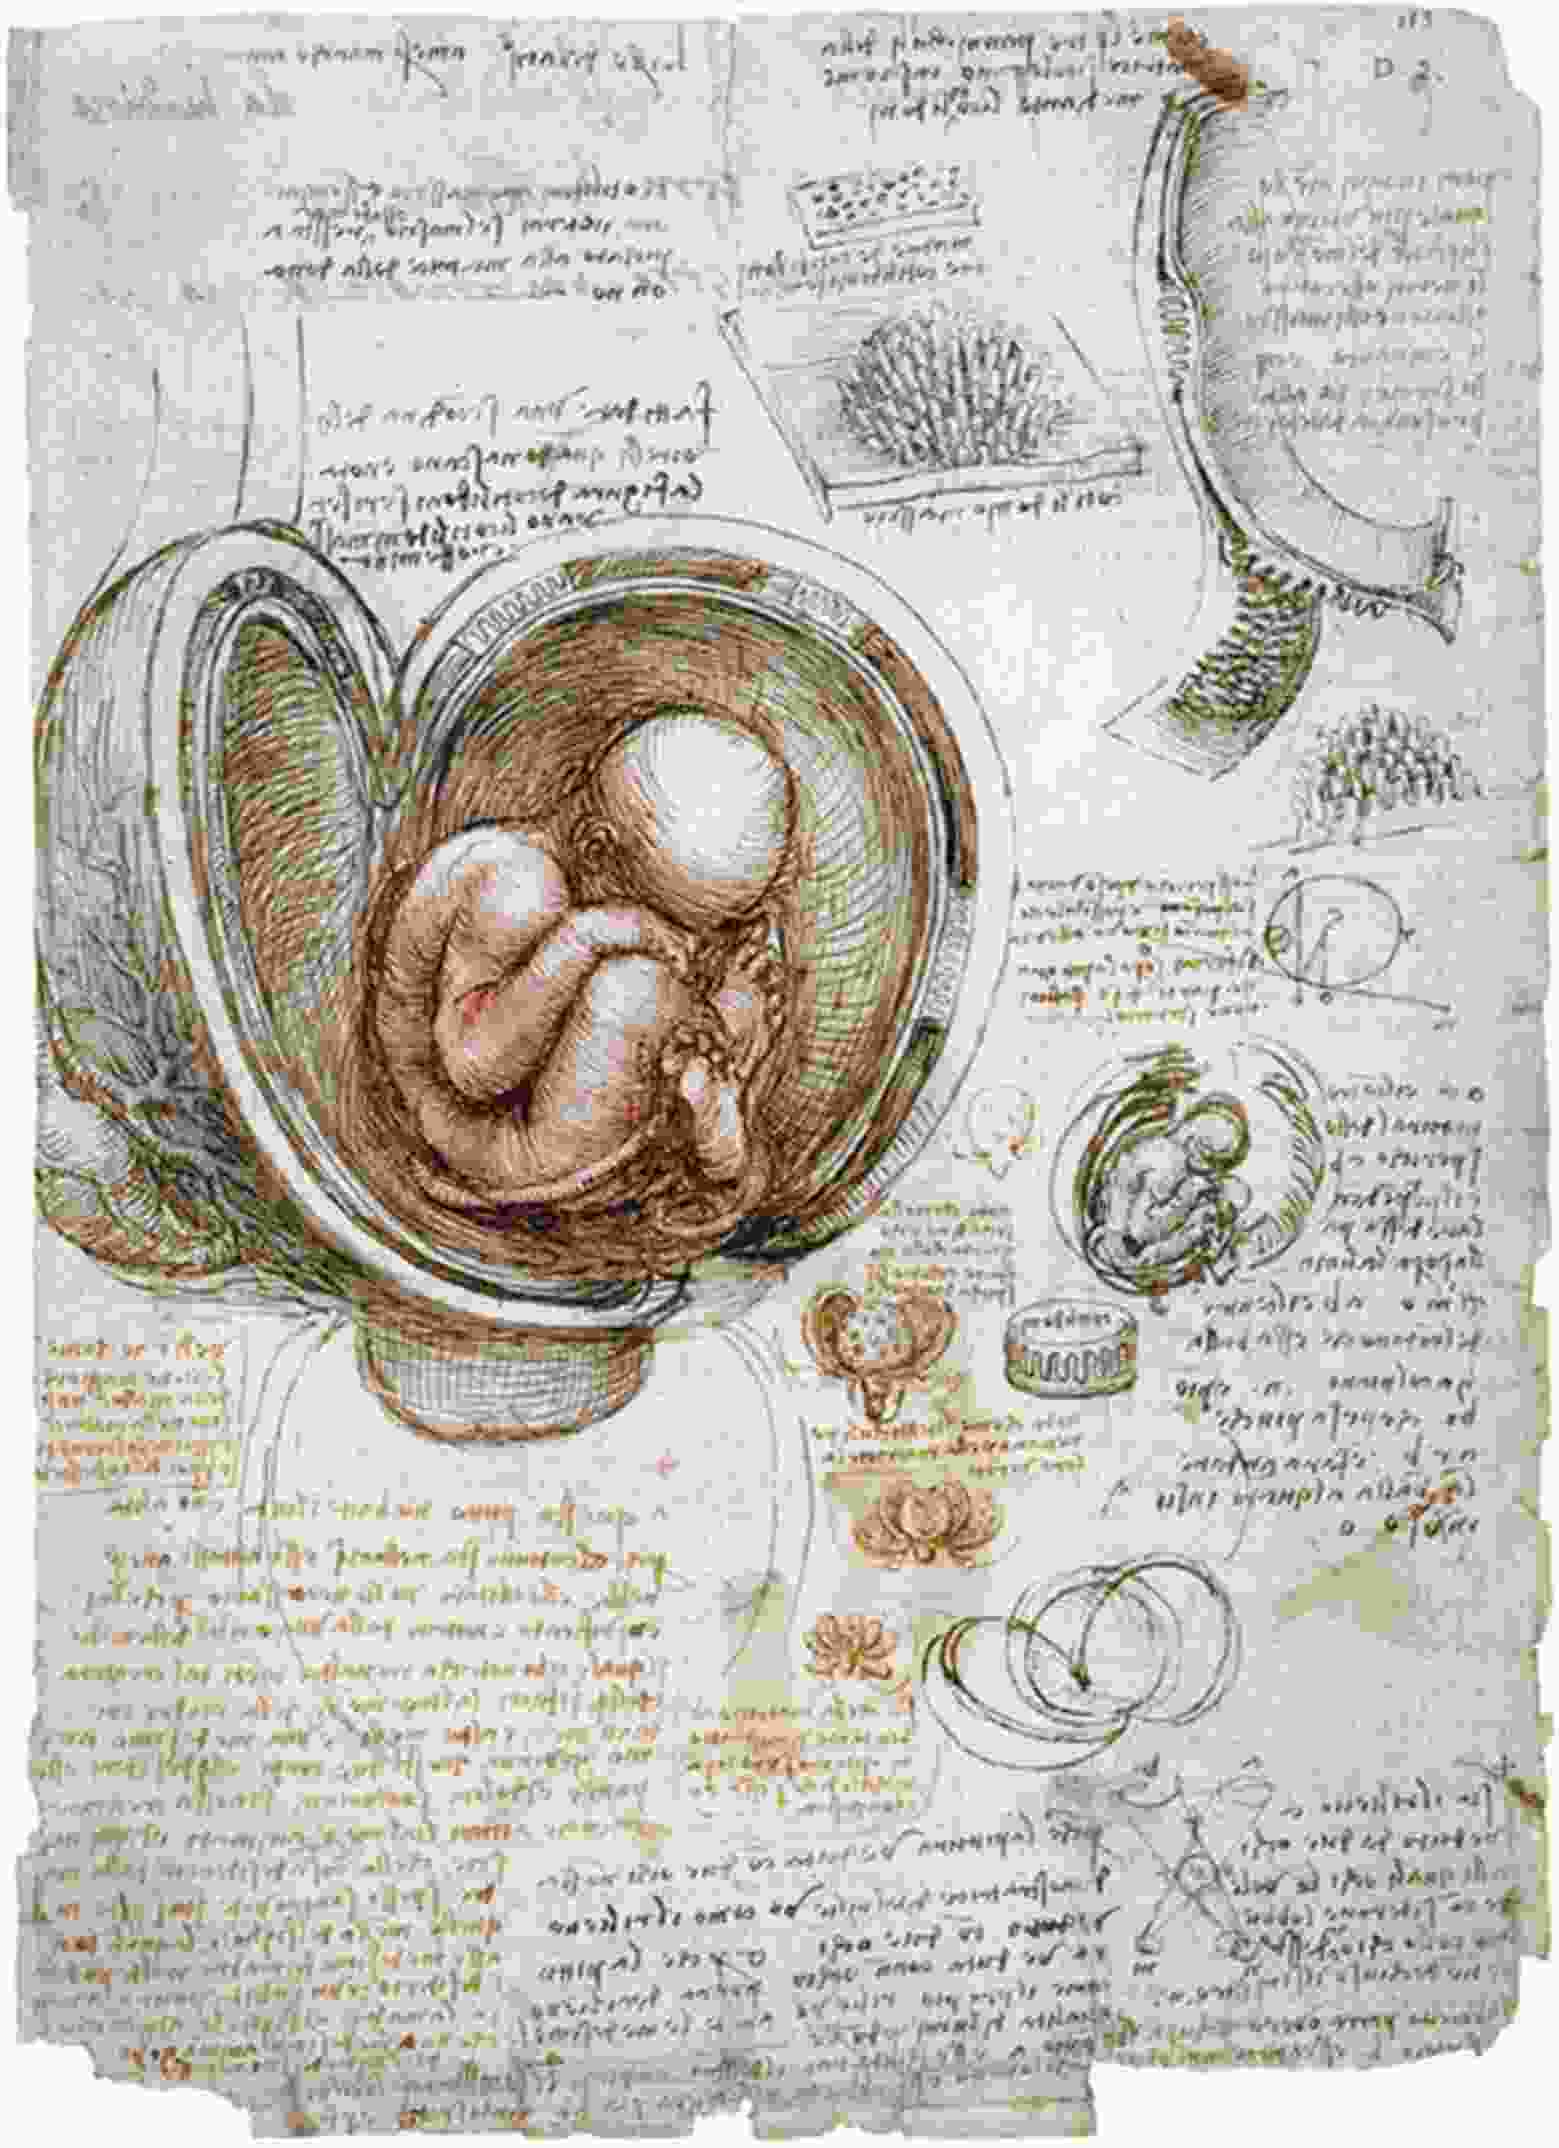 Leonardo da Vinci’s The Fetus in the Womb of 1510